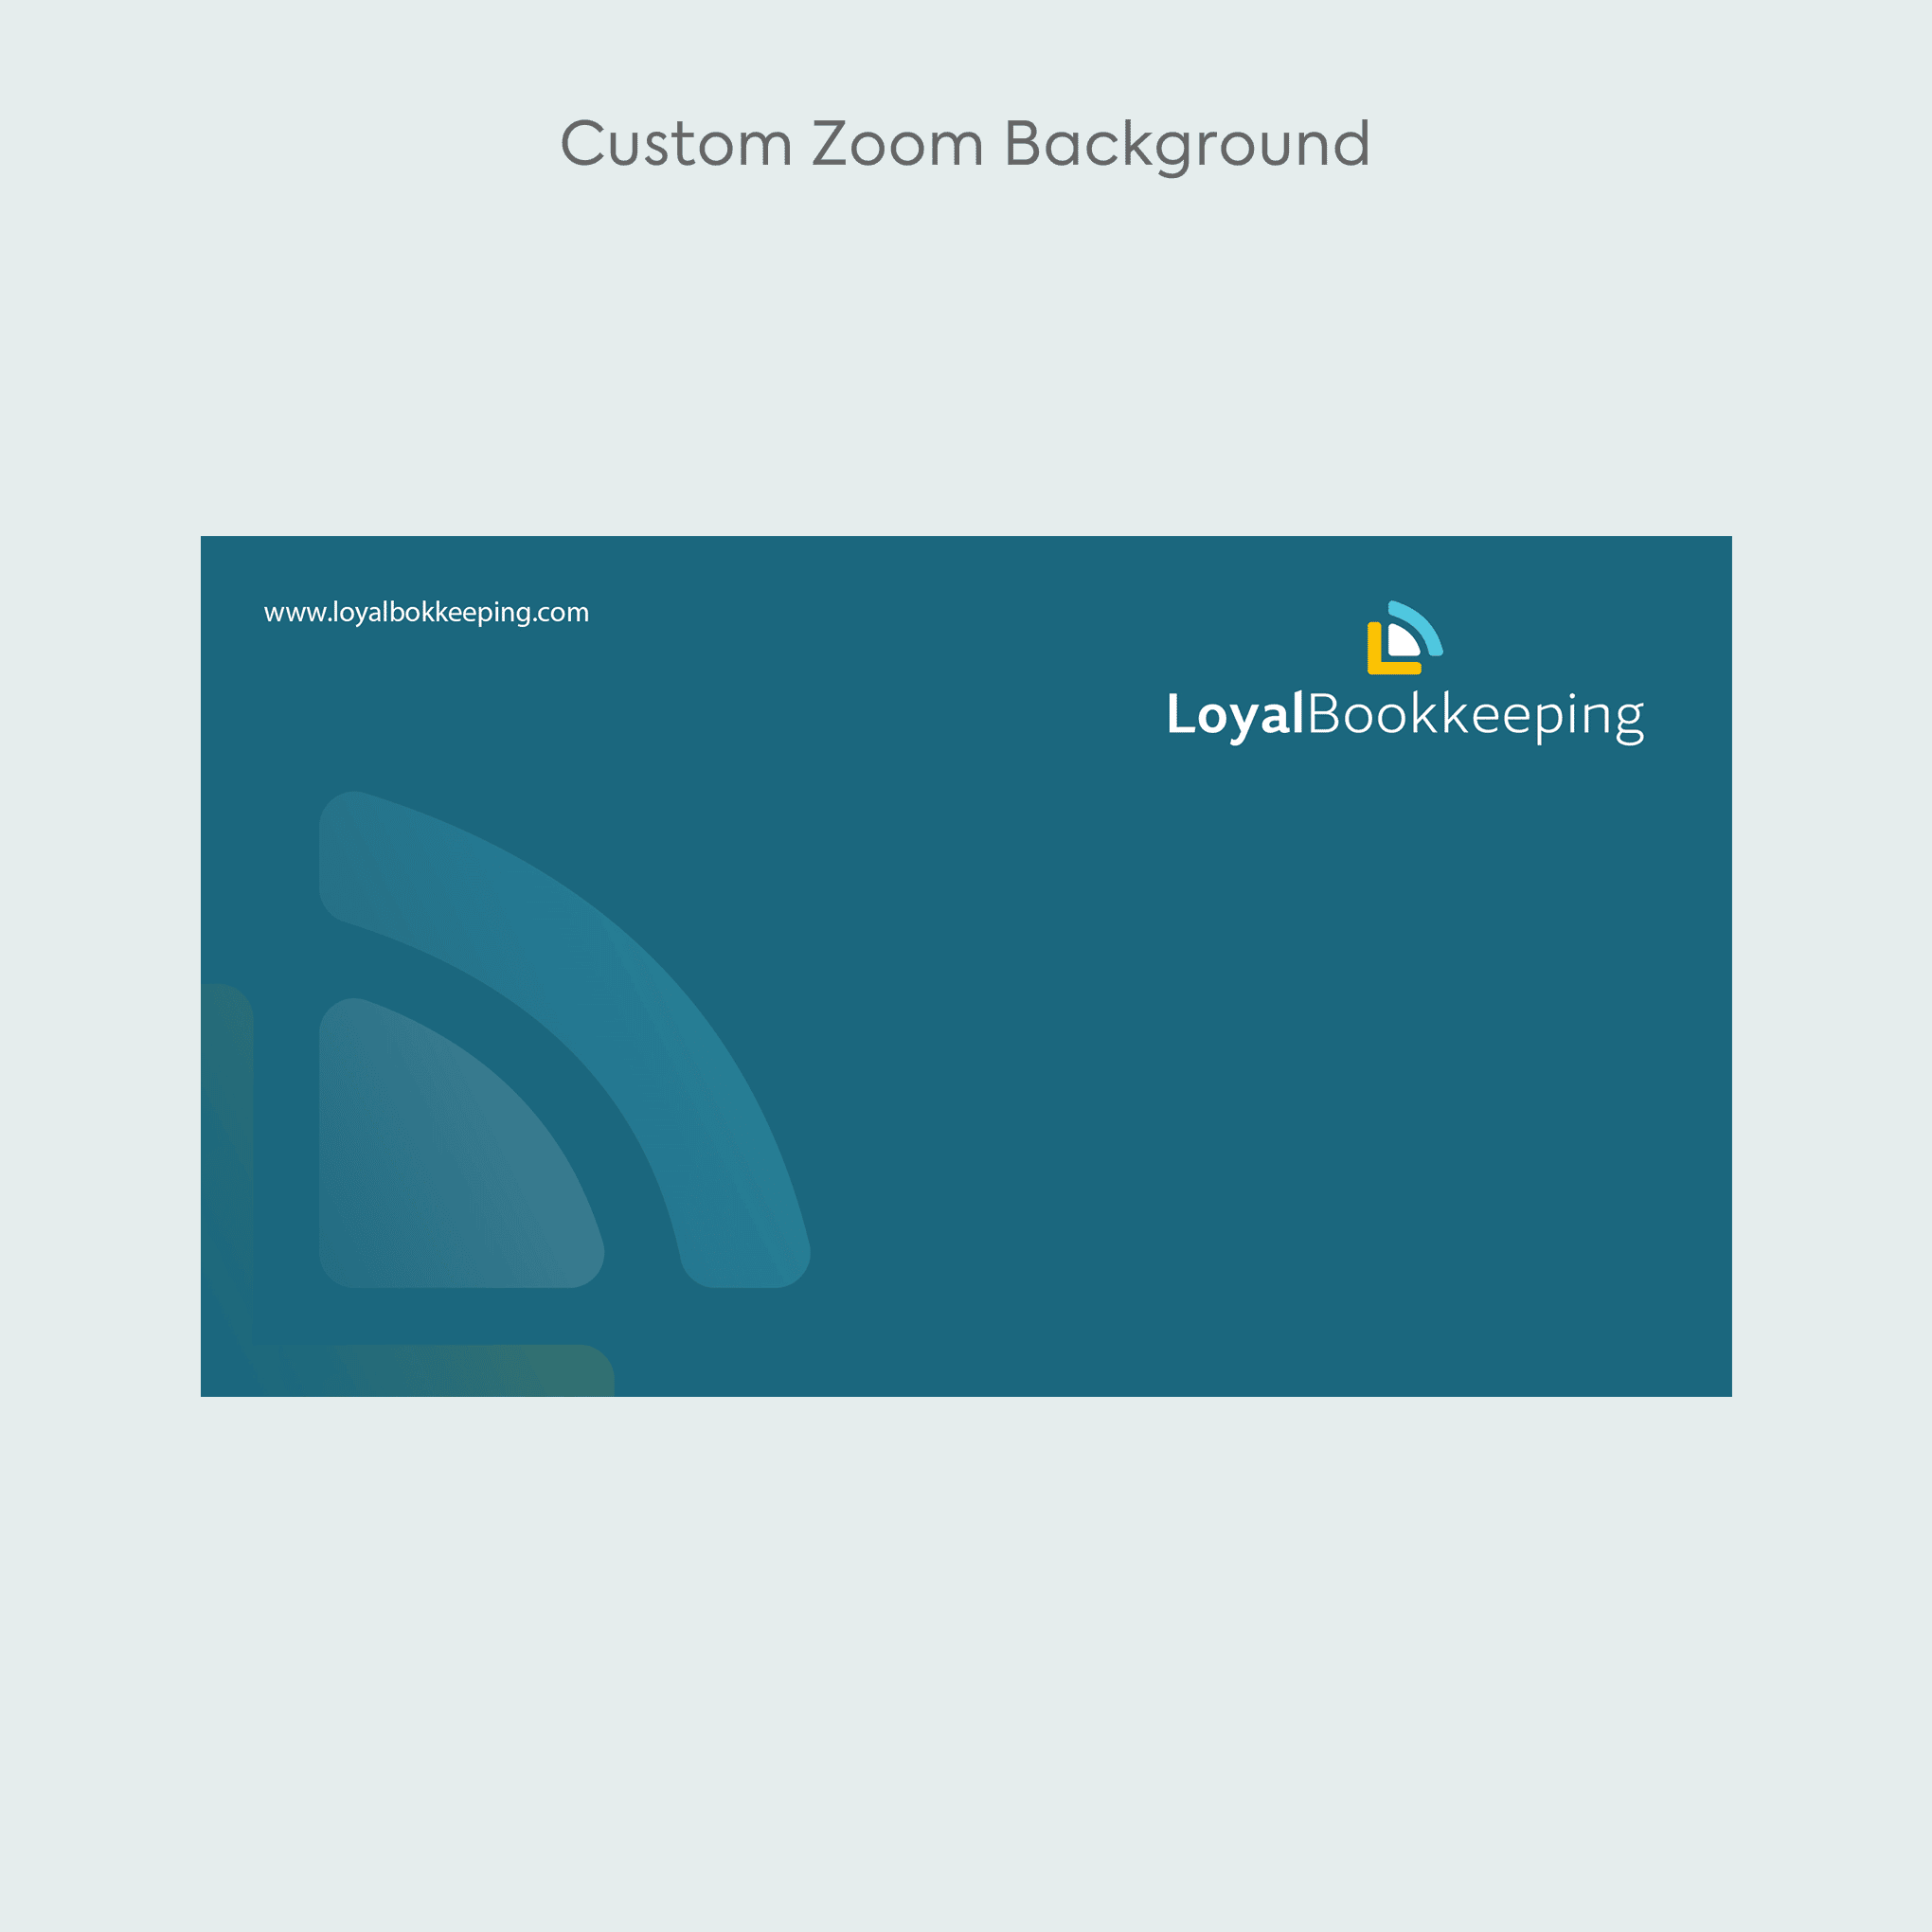 07 - Custom Zoom Background (3)